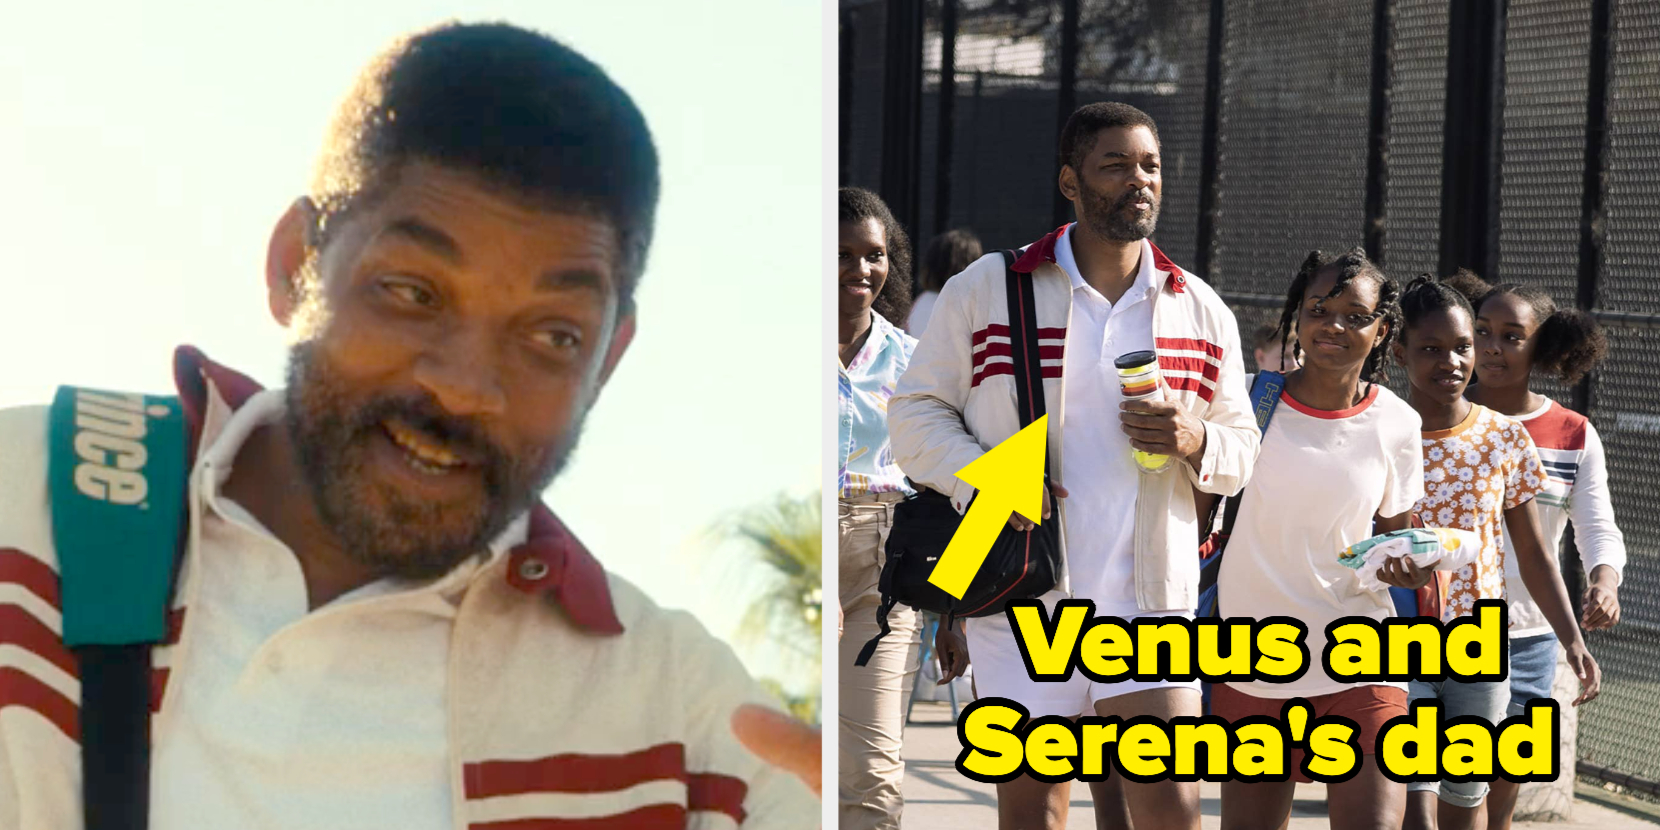 King Richard' trailer: See Will Smith as Venus, Serena Williams' dad